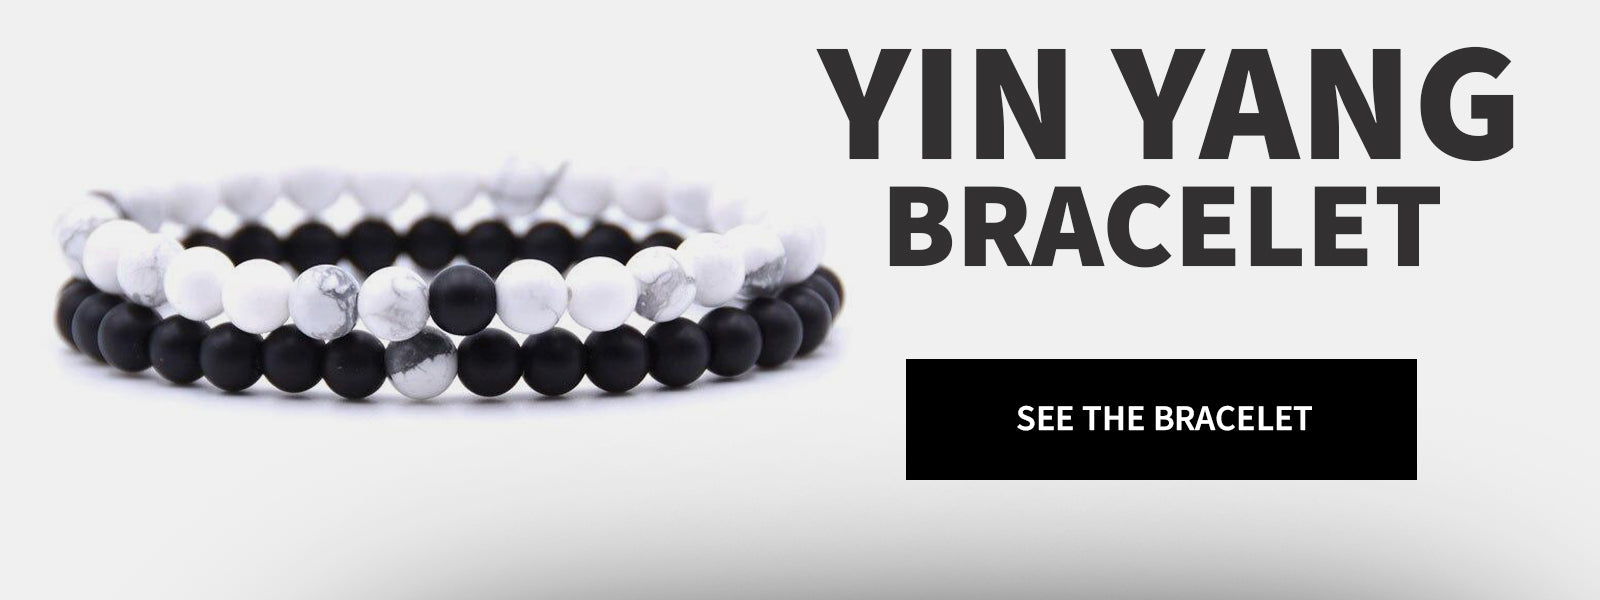 Yin Yang Bracelets Meaning